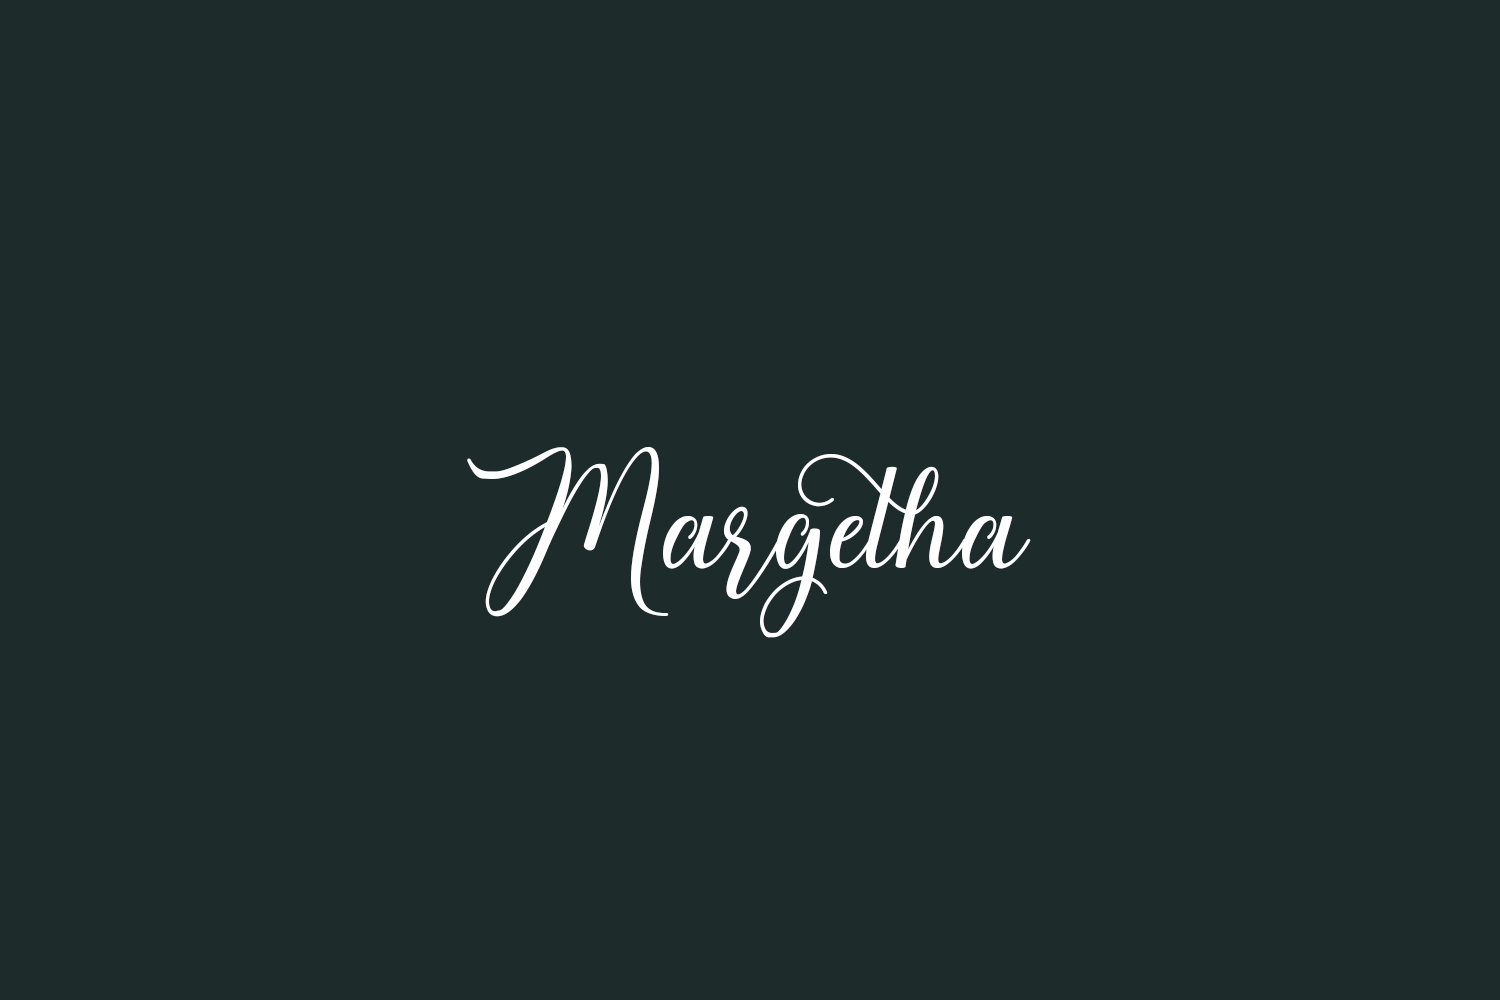 Margetha Free Font